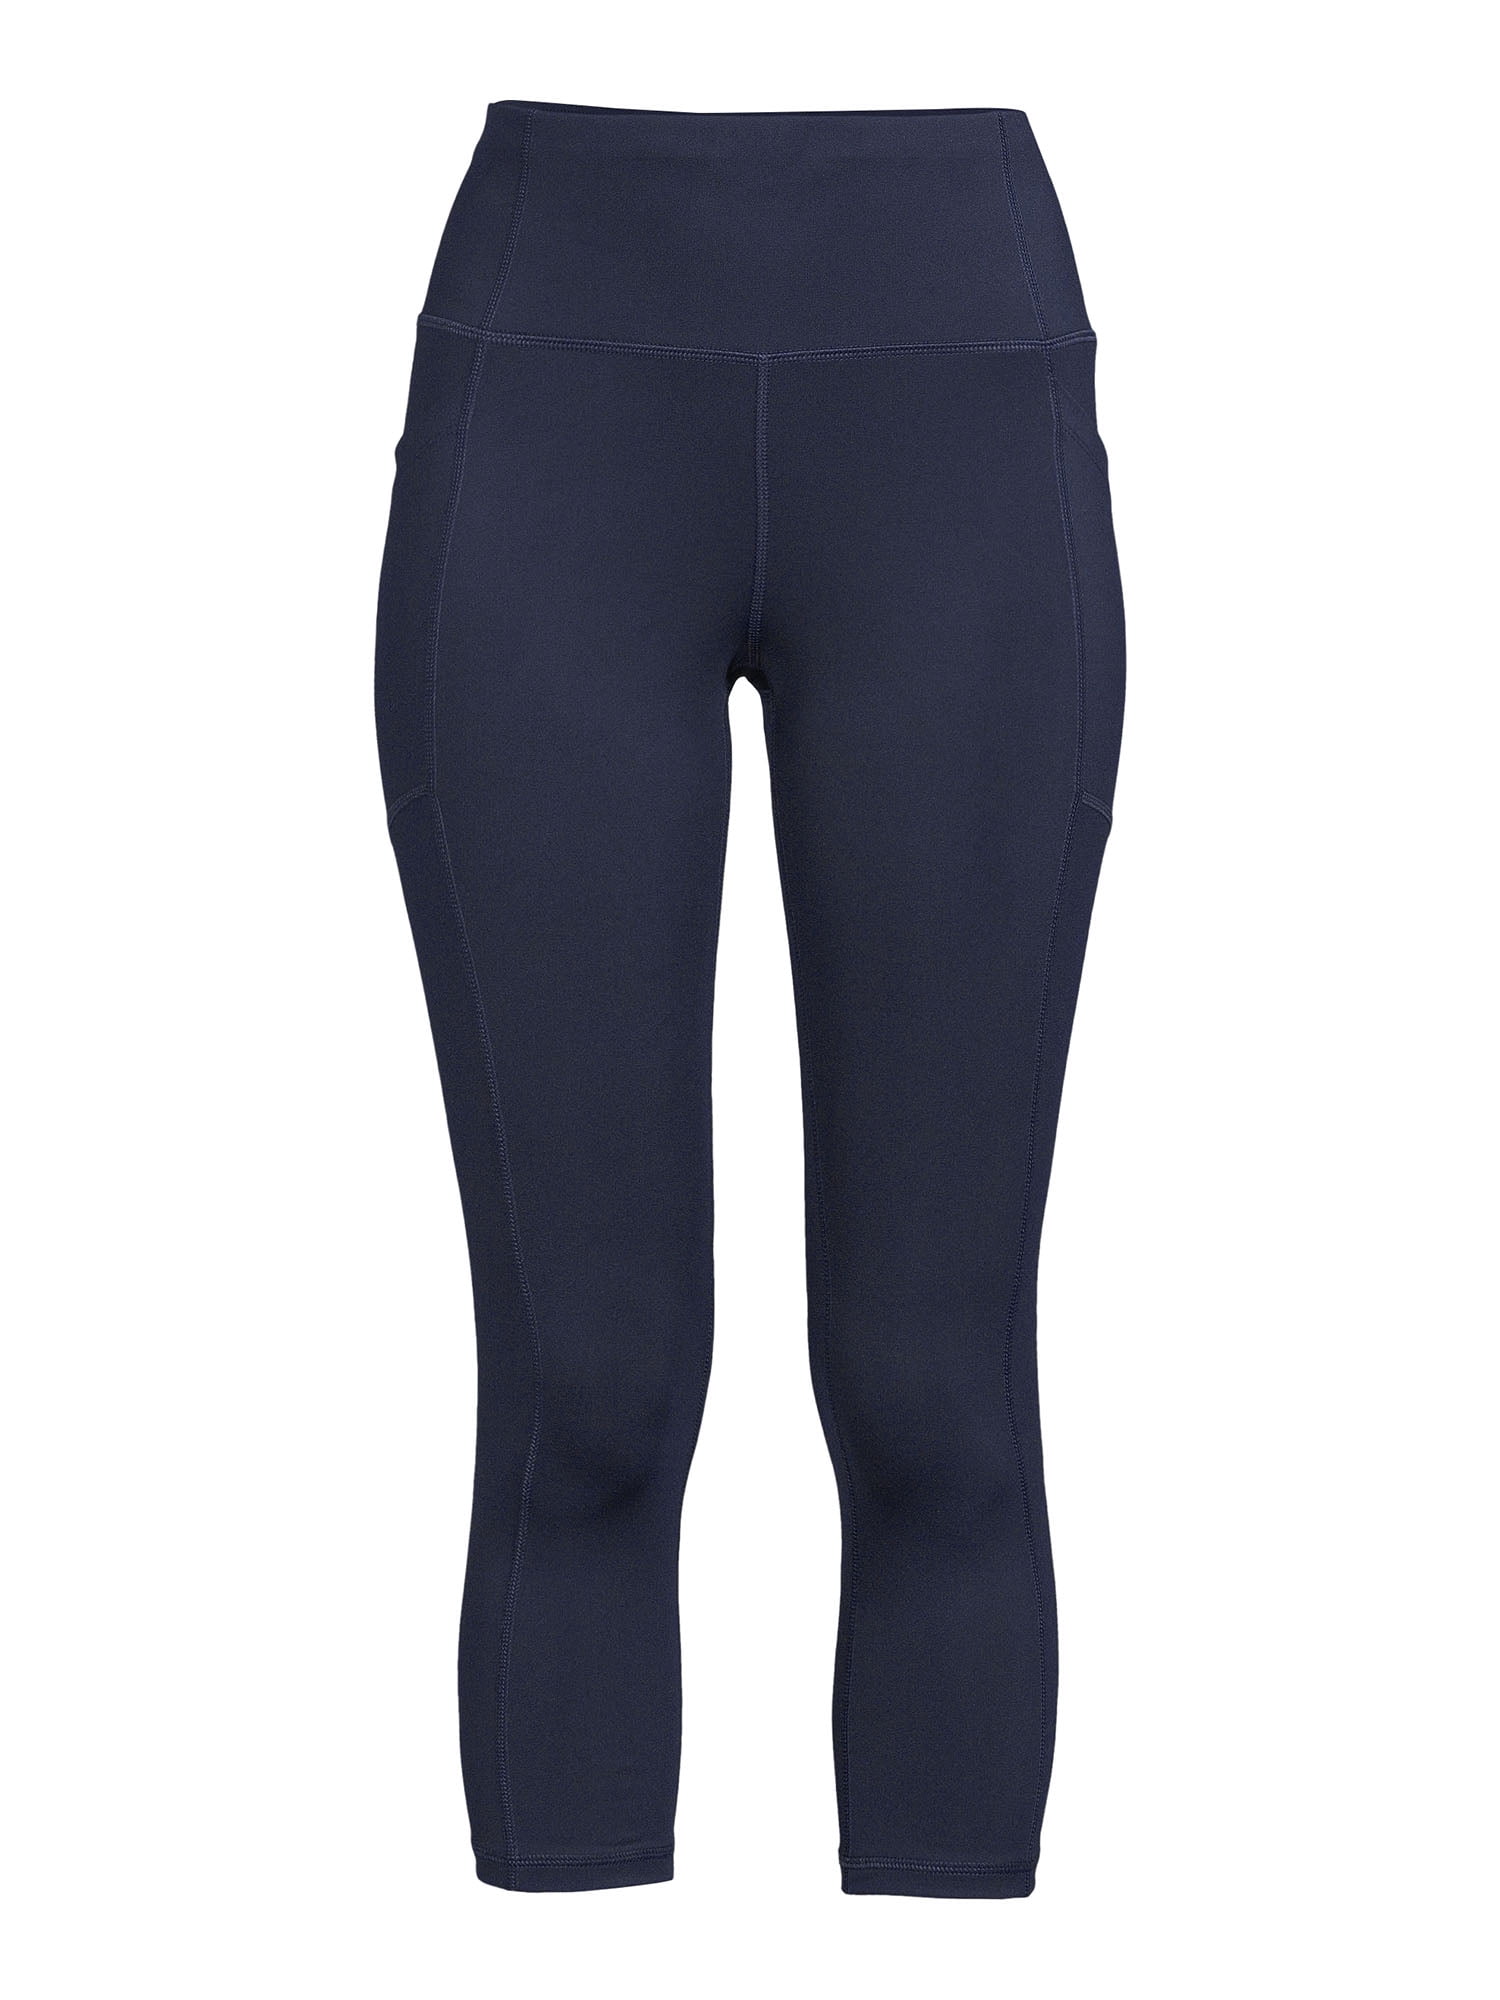 New Avia Fashion Capri Leggings Women Navy Blue many sizes - AAA Polymer